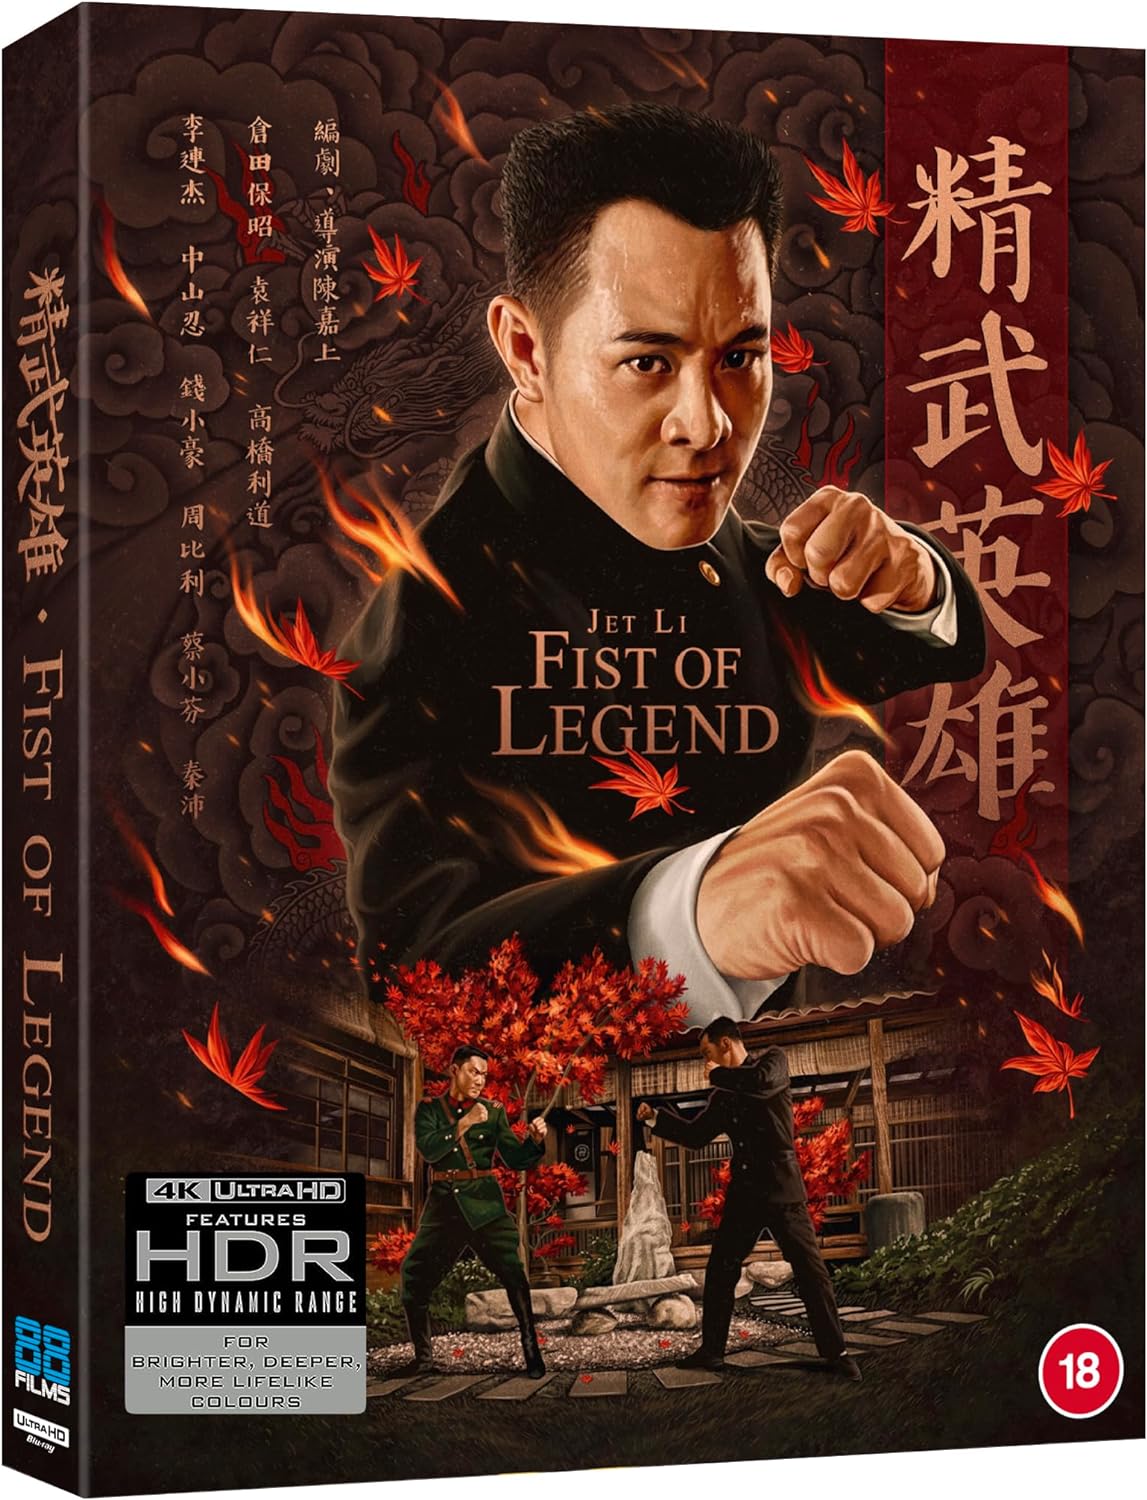 Fist of Legend 4K UHD + Blu-ray with Slipcover (88 Films/Region Free/B) [Preorder]